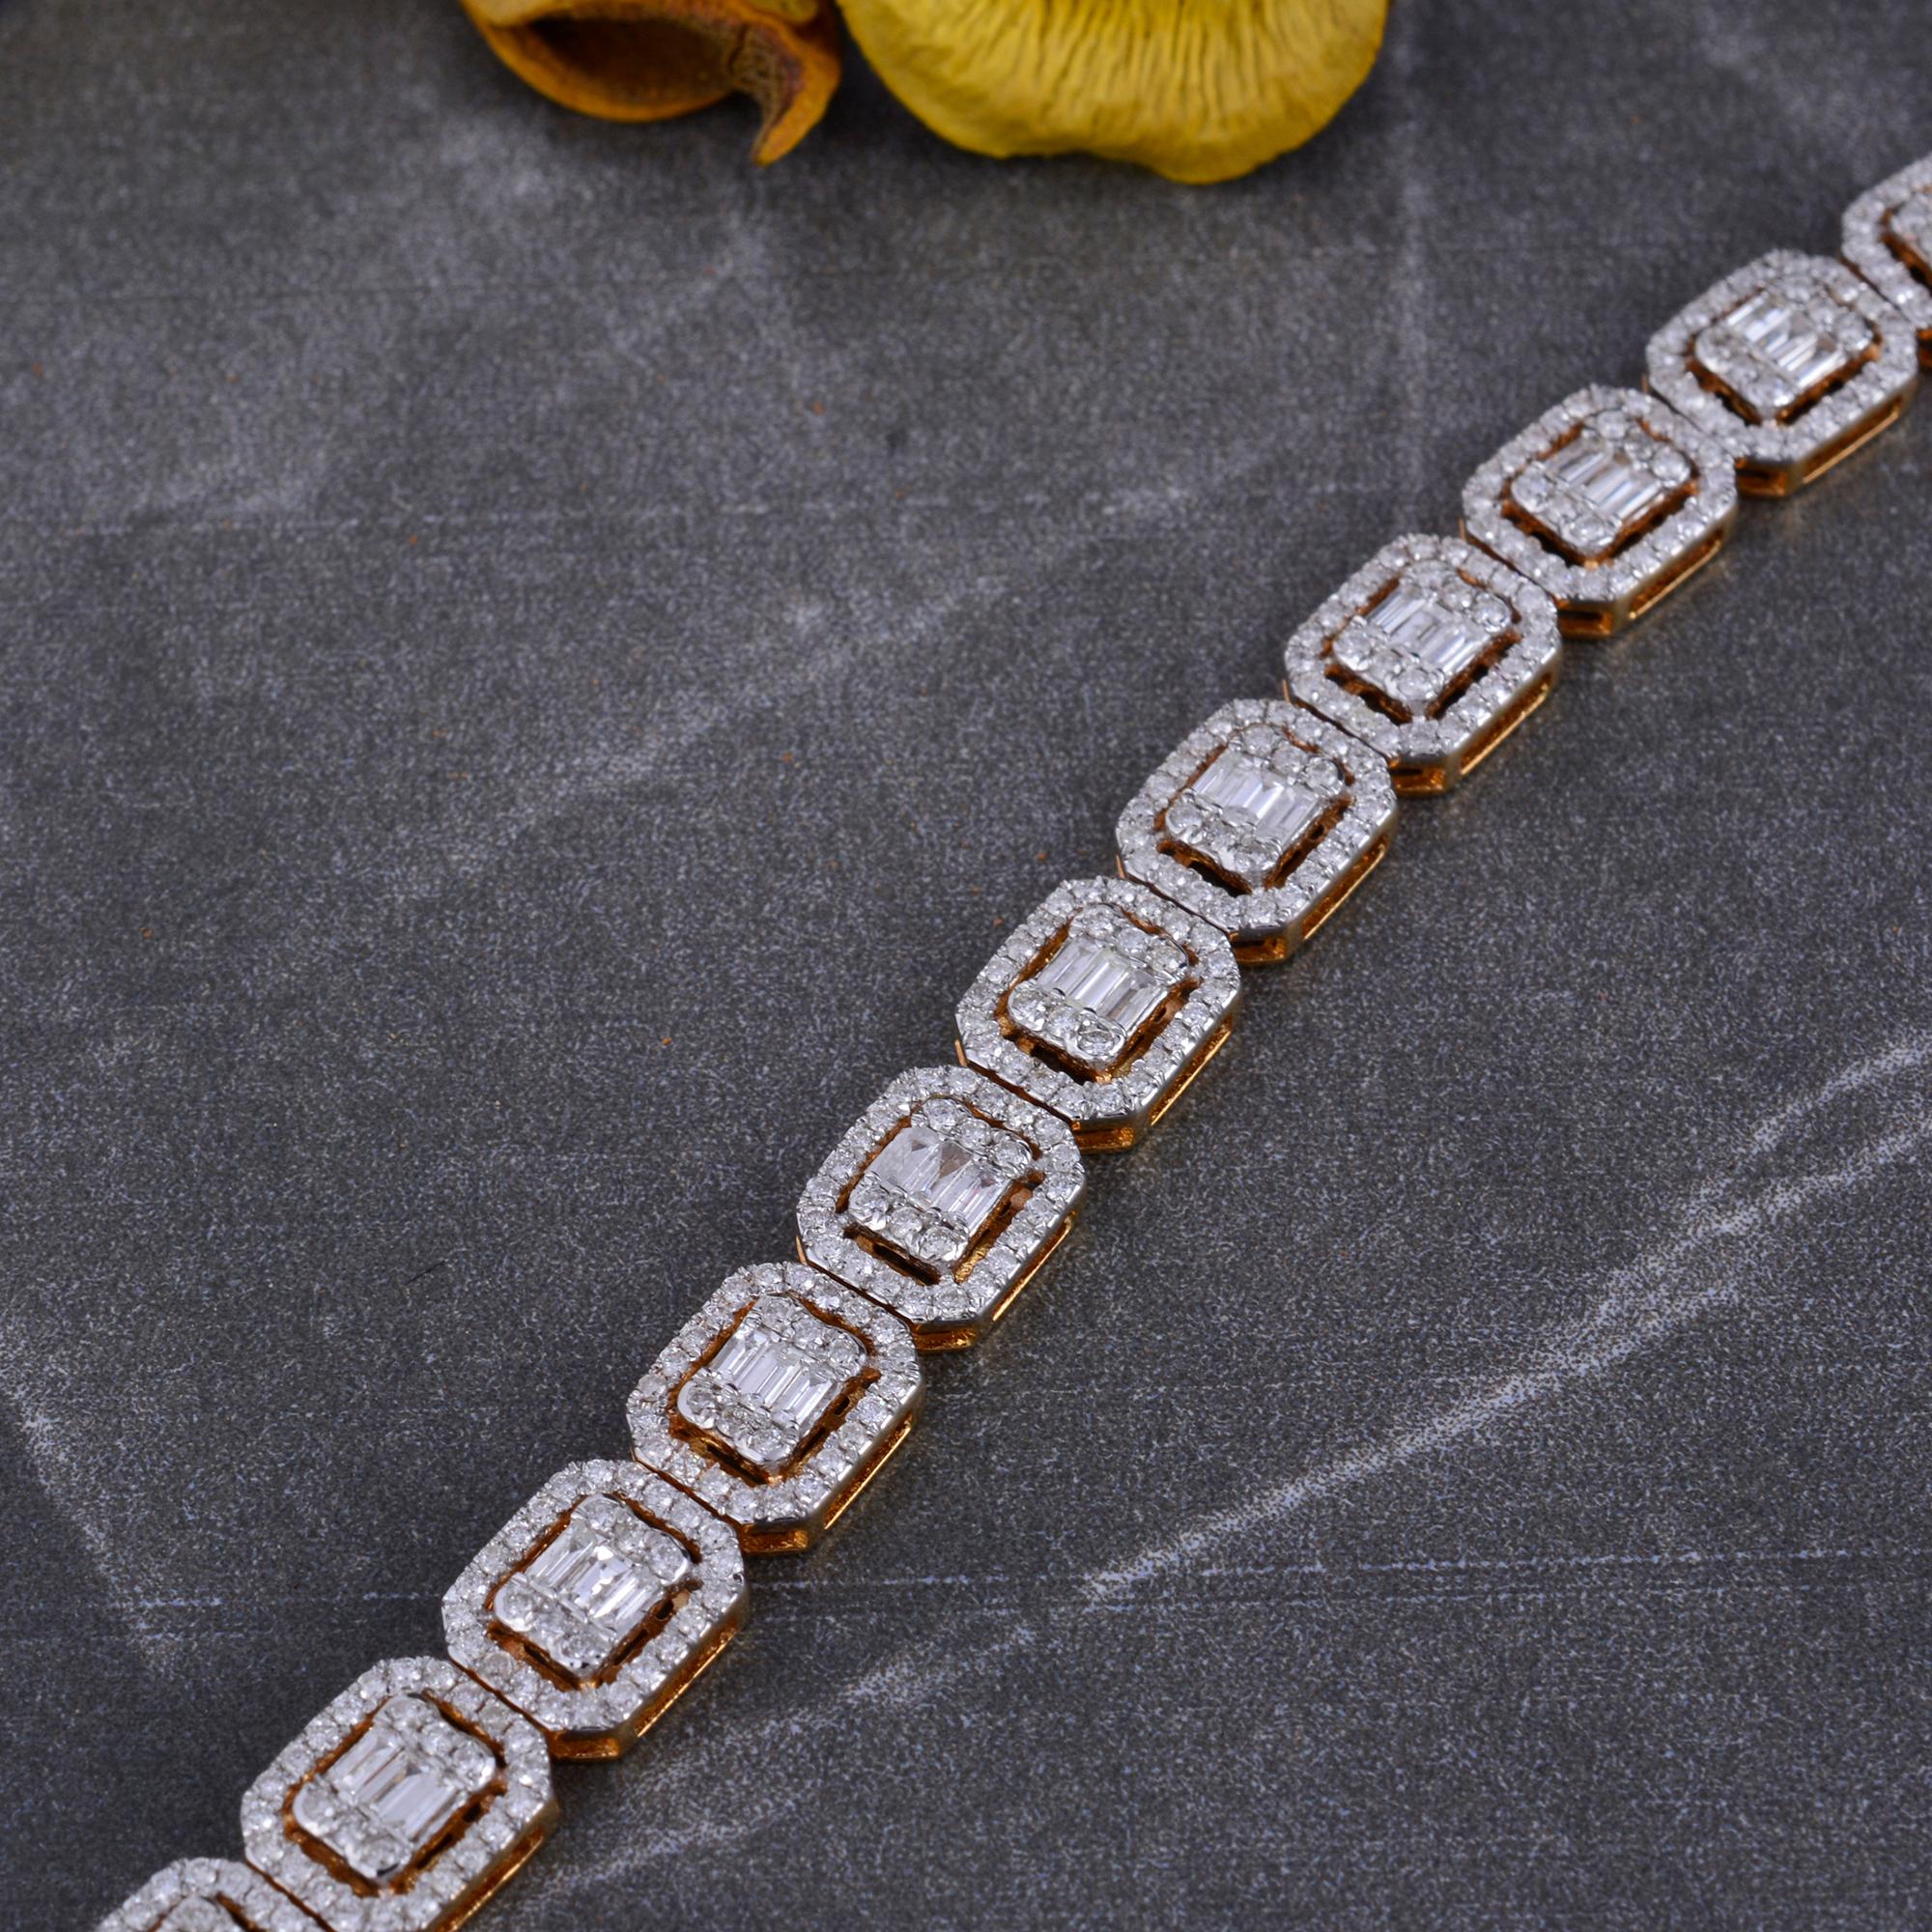 1.60ct 18ct yellow gold tennis bracelet guaranteed g/h colour si purity natural diamonds